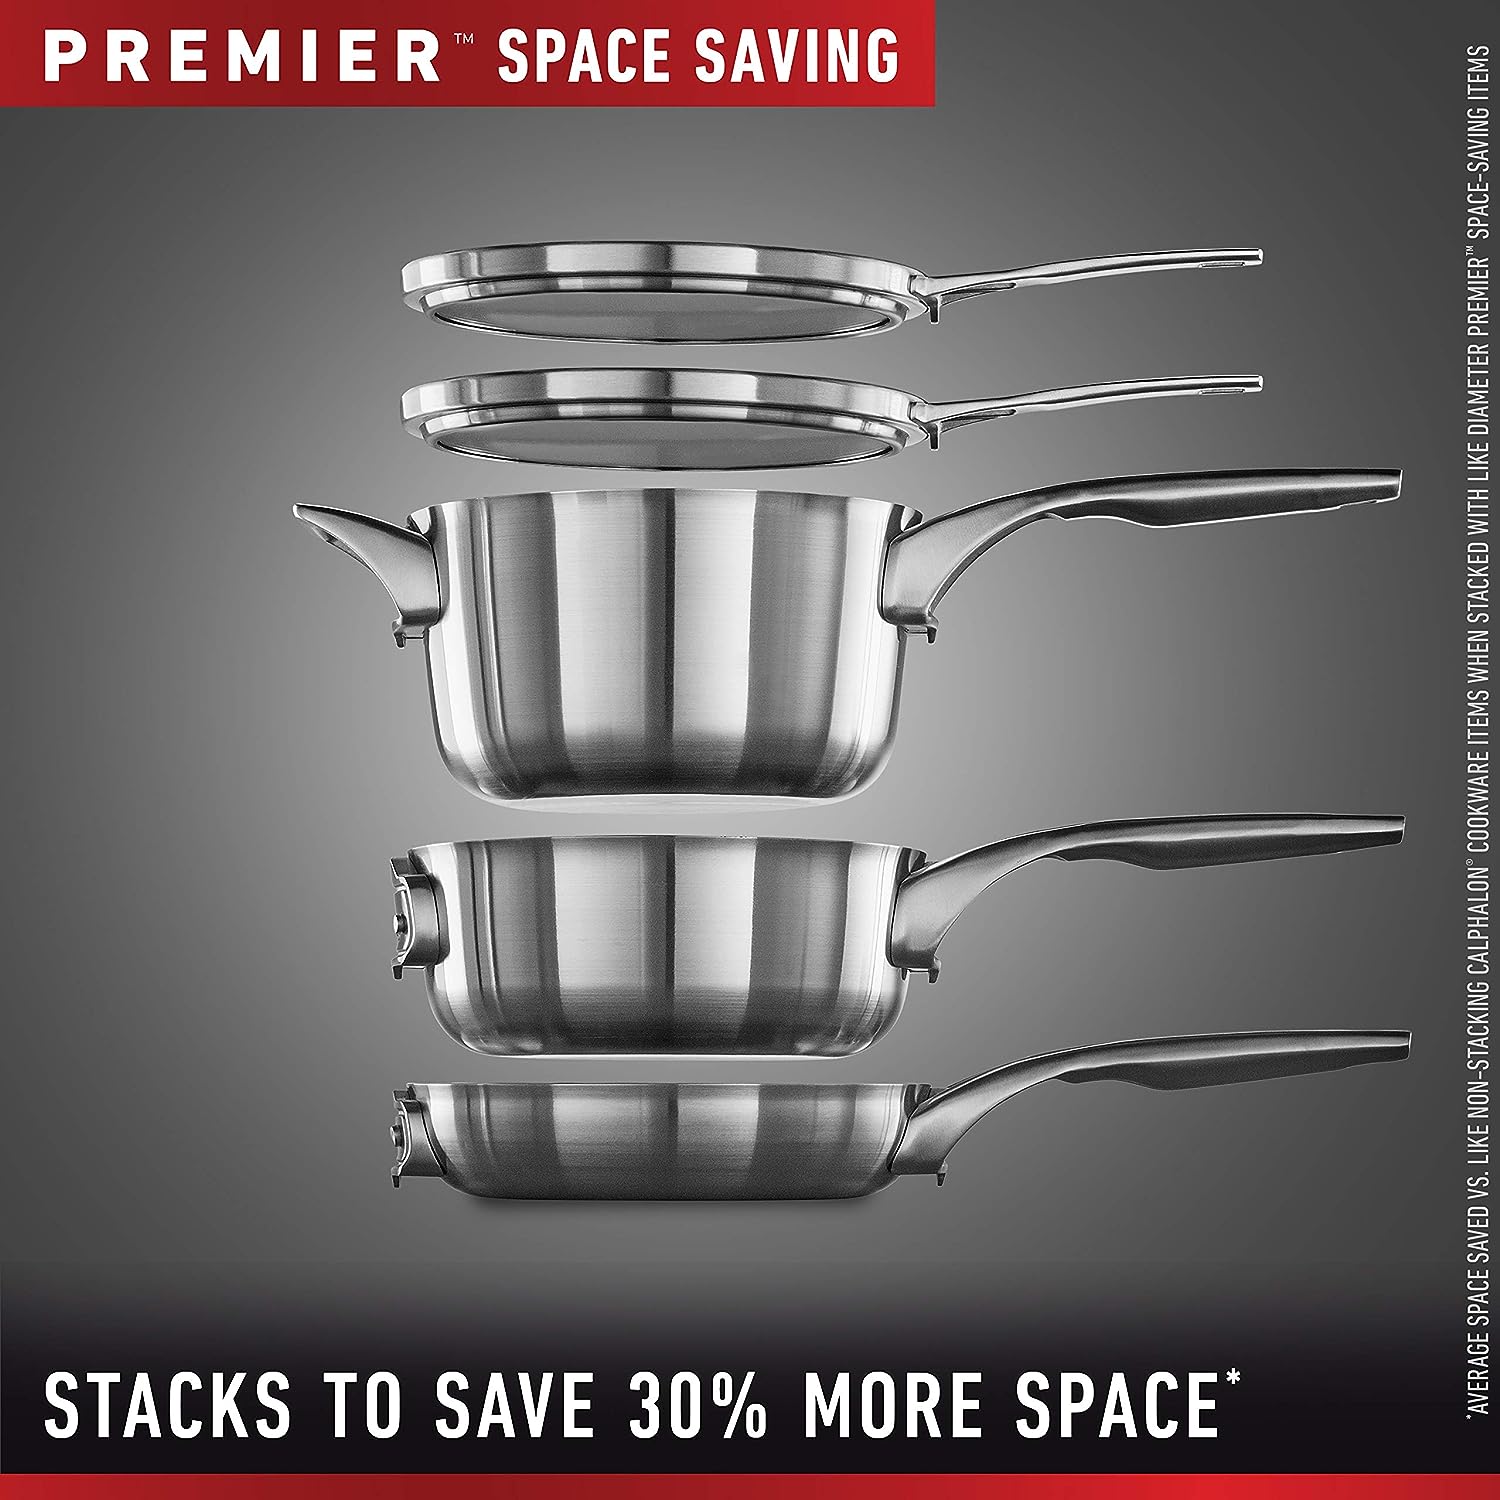 Calphalon Premier 10 Piece Stainless Steel Space Saving Cookware